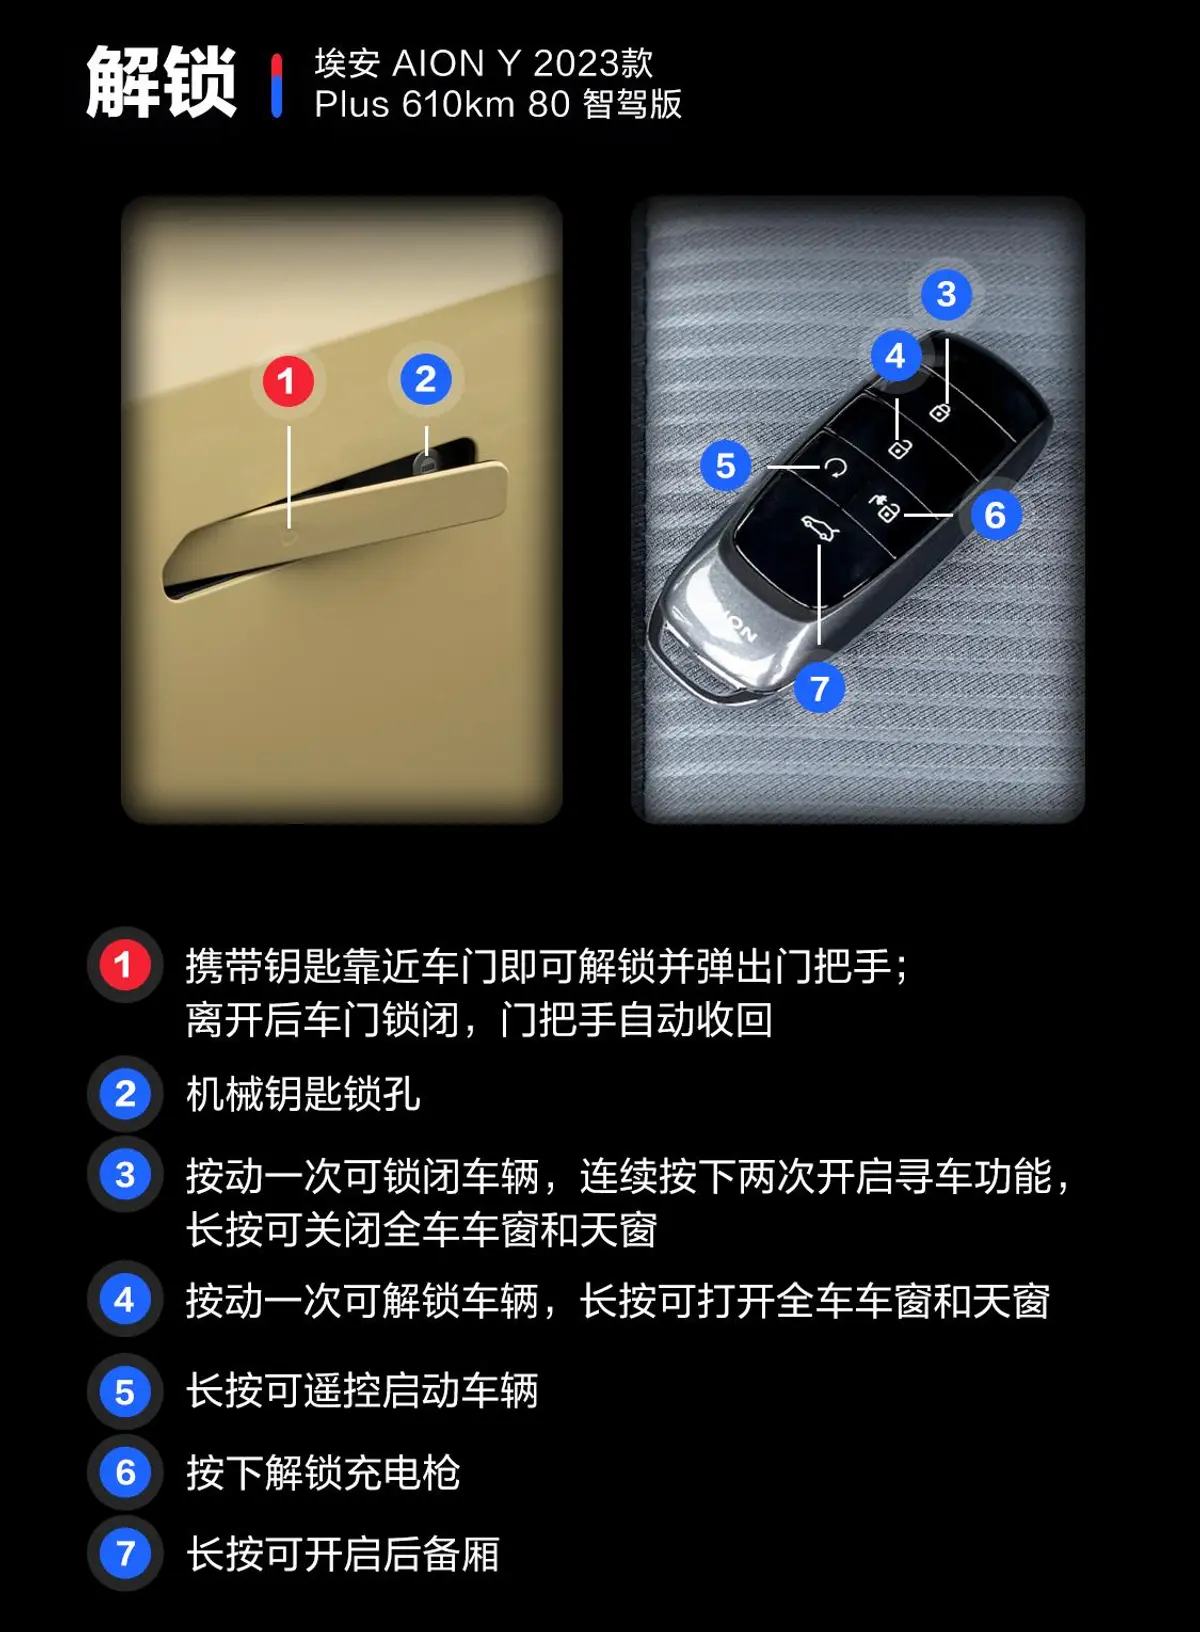 AION YPlus 610km 80 智驾版